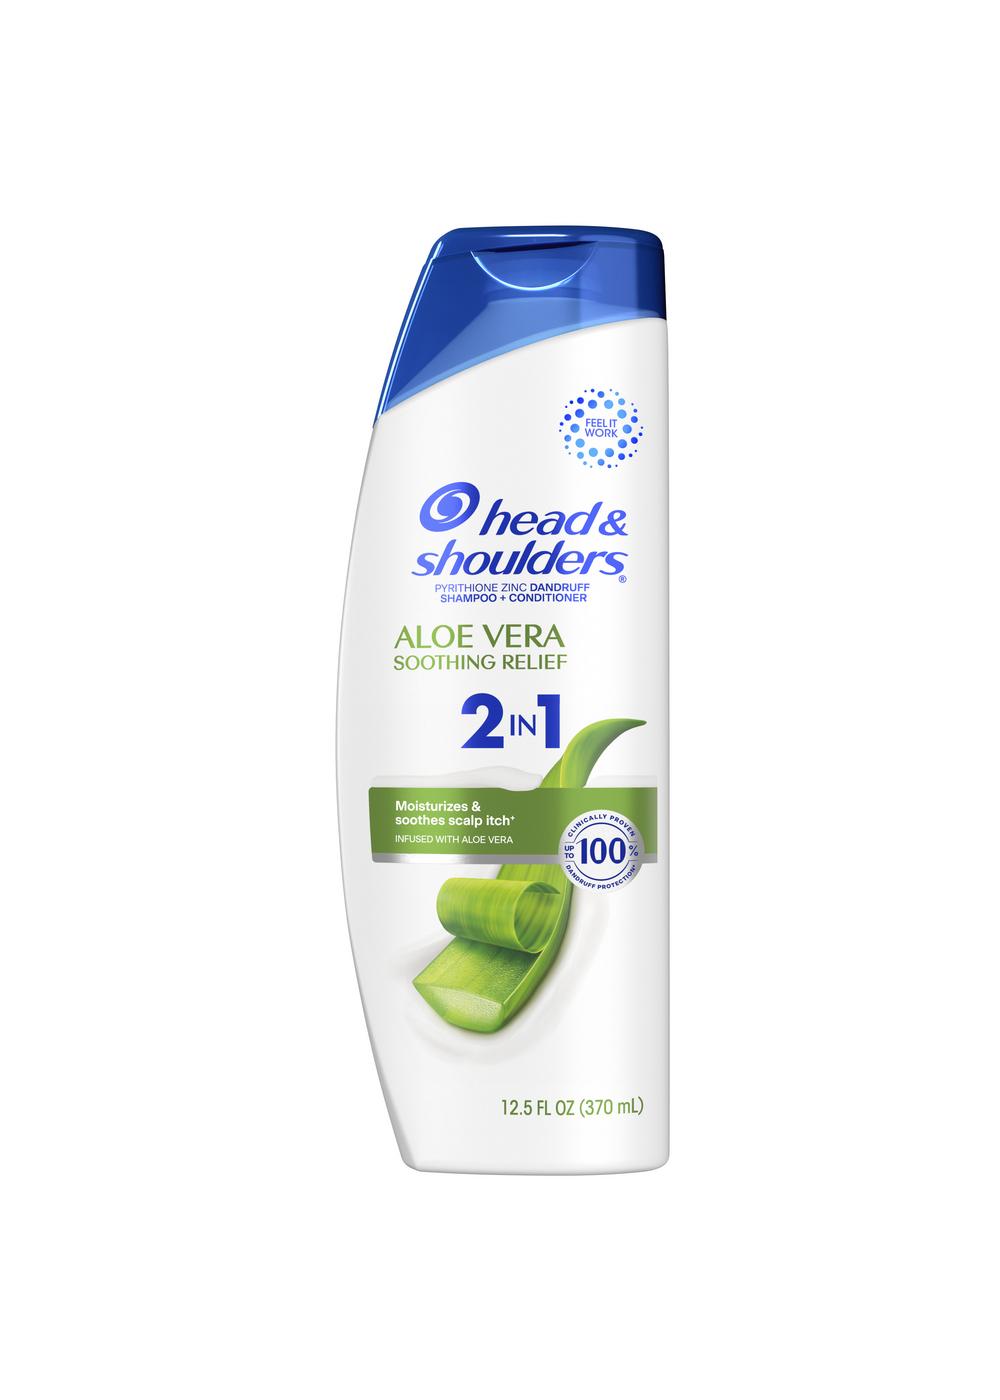 Head & Shoulders Aloe Vera Soothing Relief 2 In 1 Shampoo + Conditioner; image 1 of 2